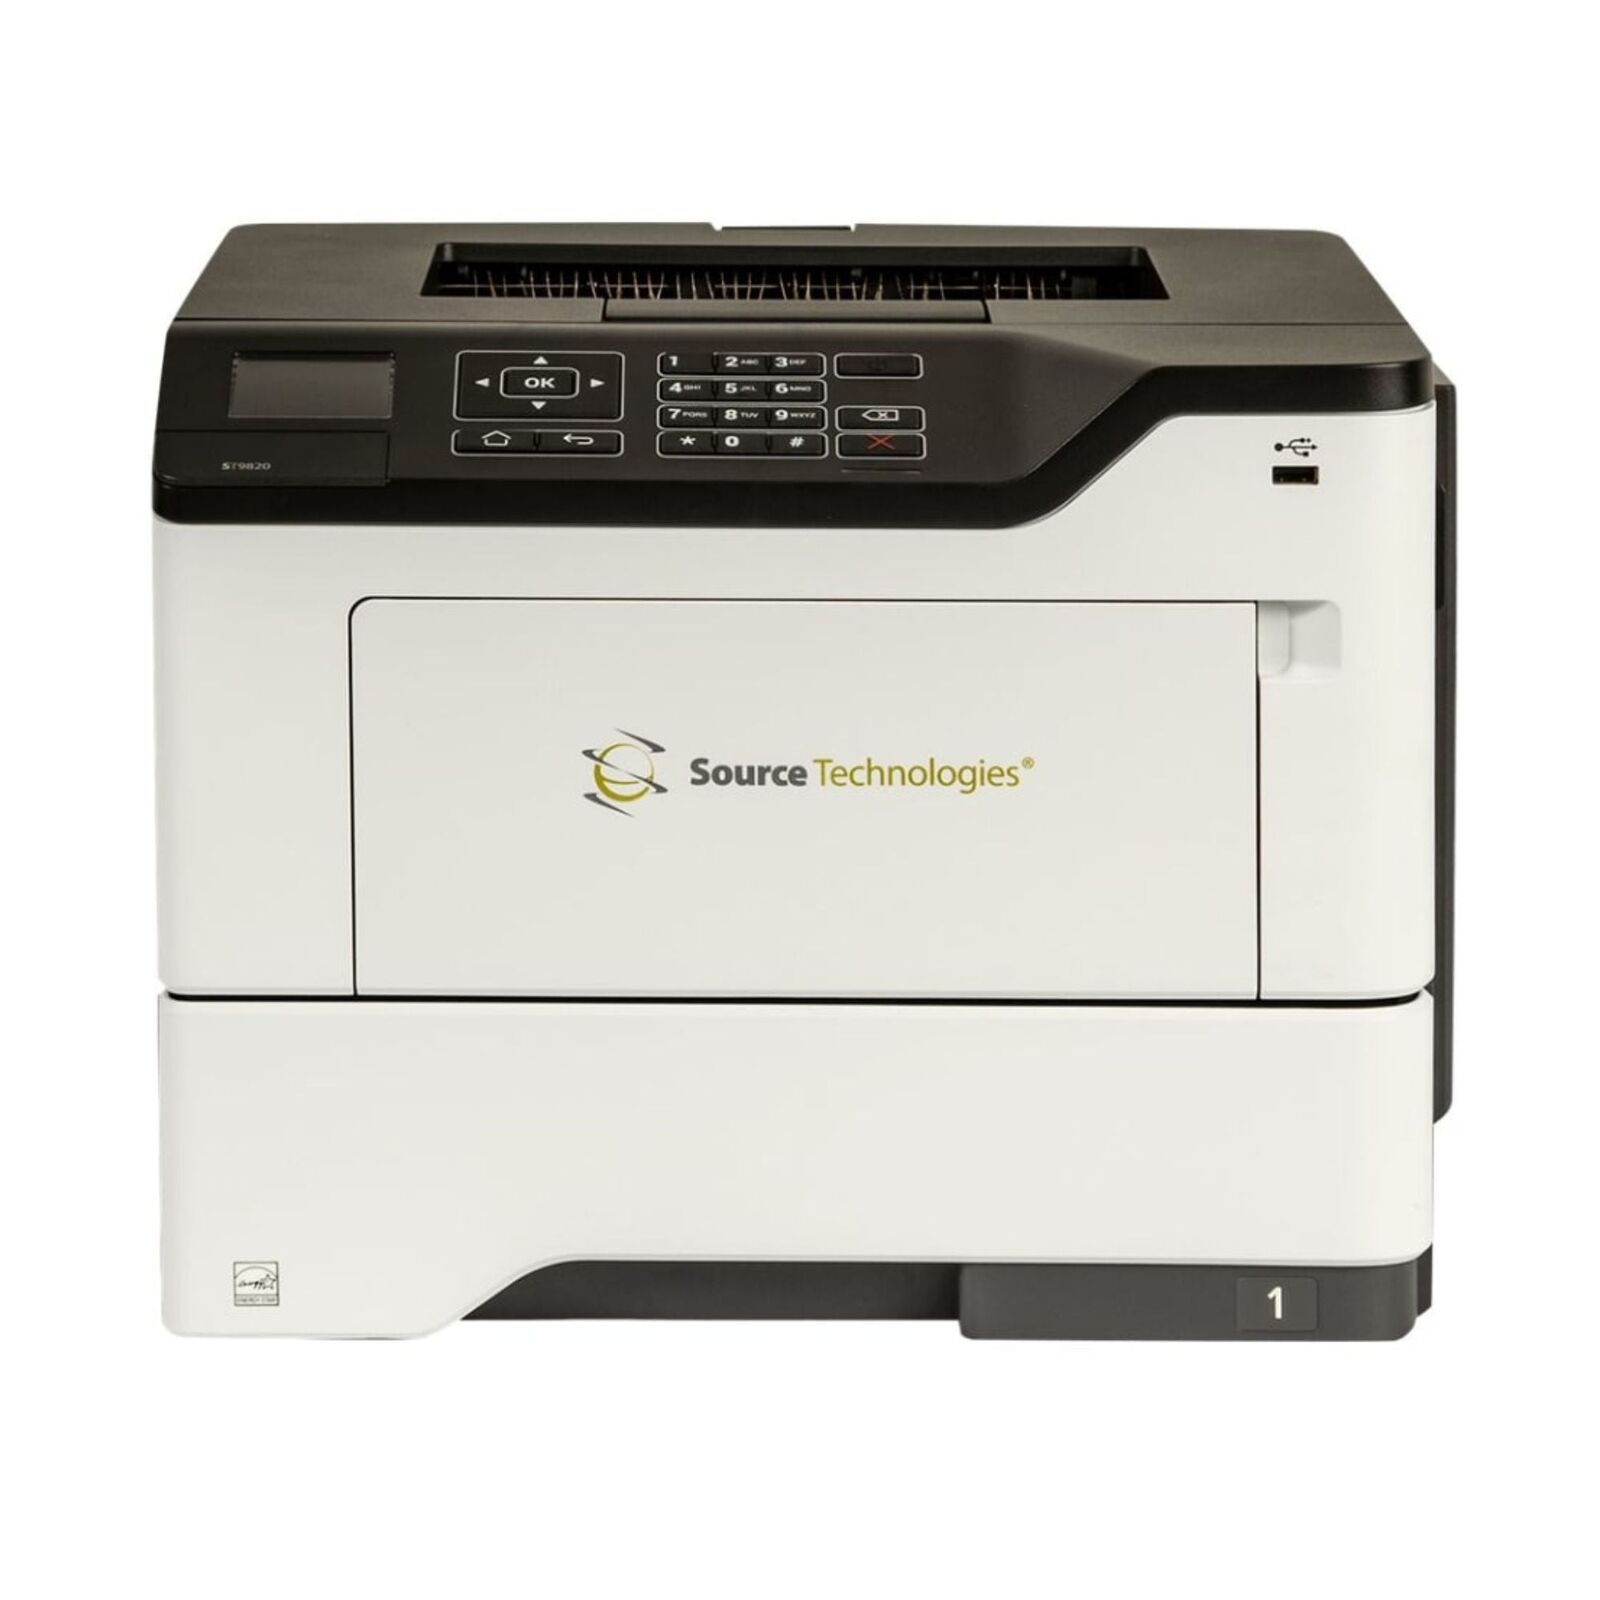 Source Technologies L101-0000000 Secure MICR Network Monochrome Laser Printer (M